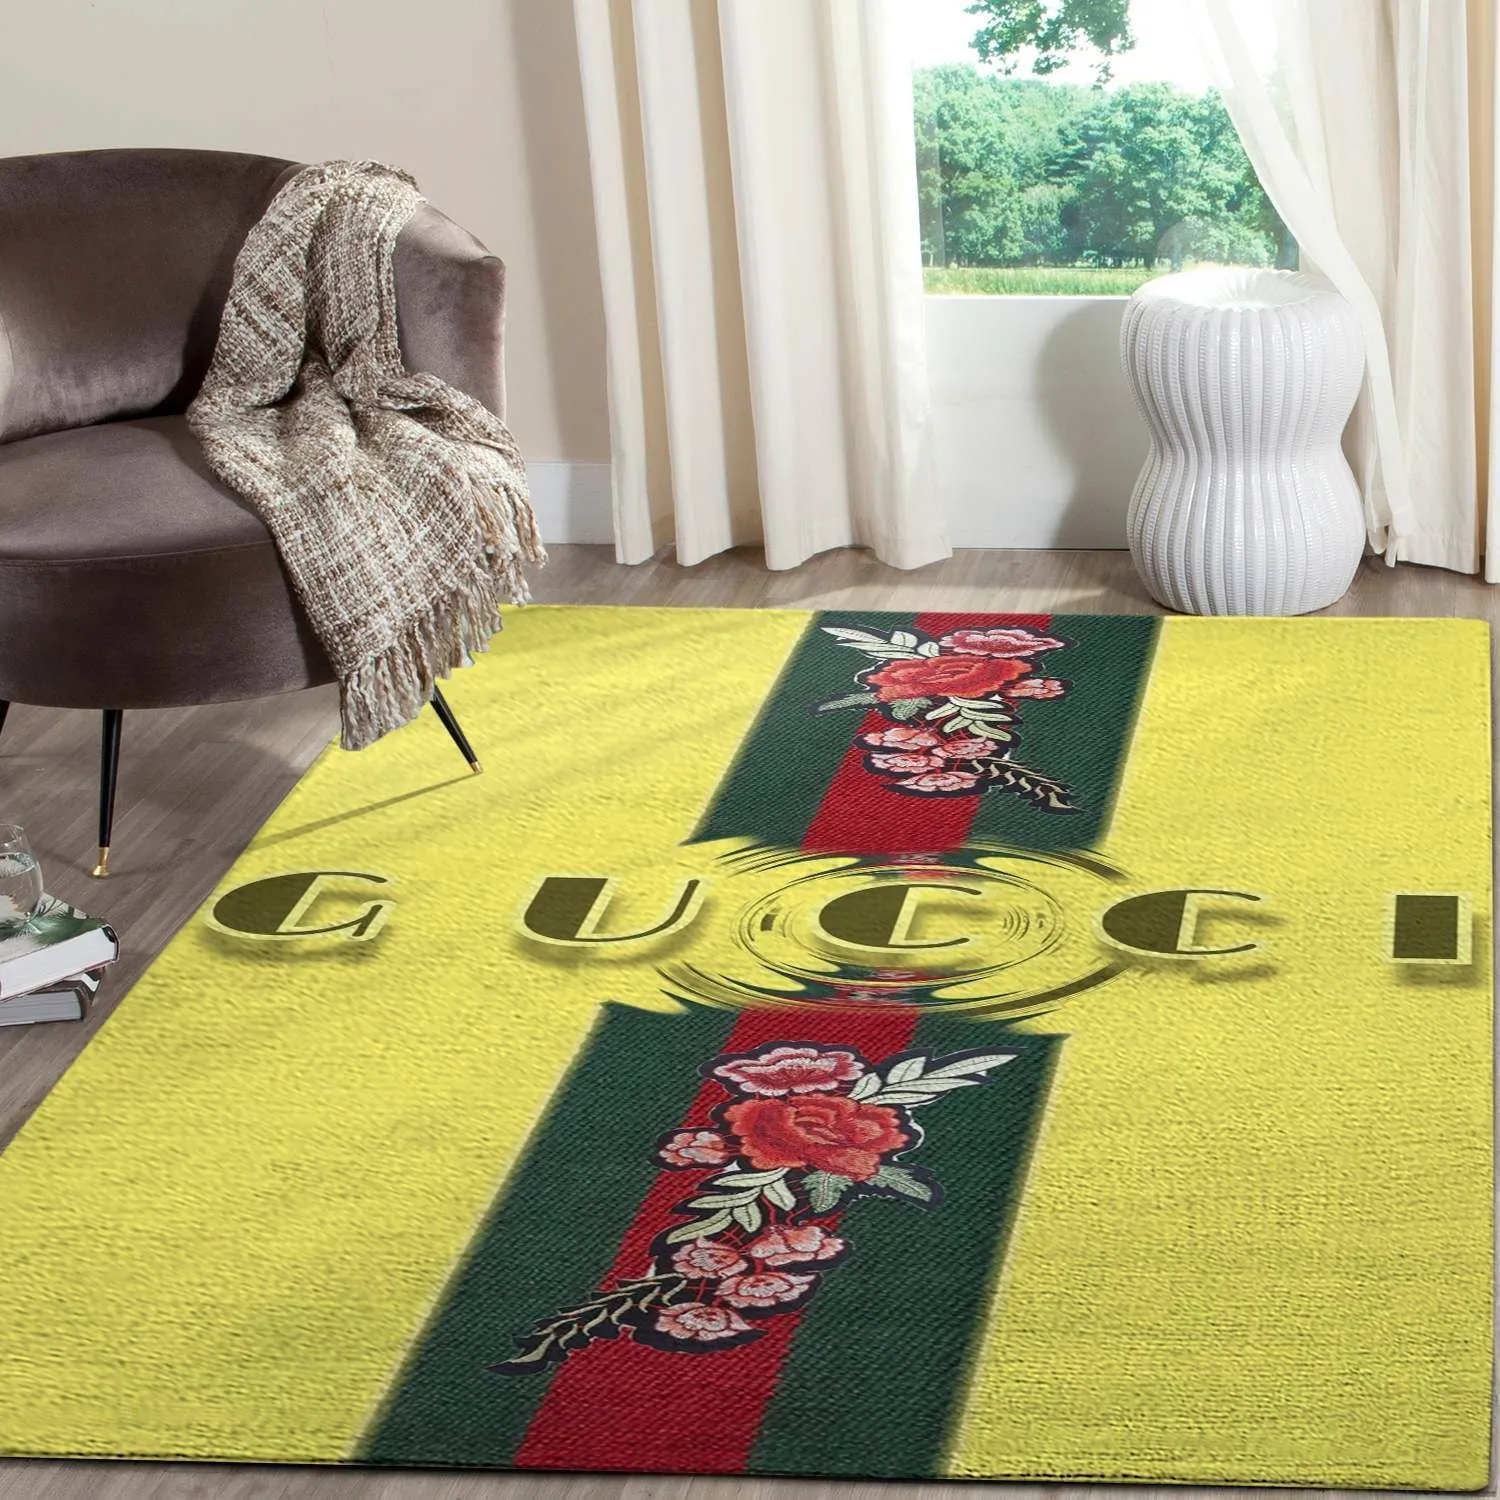 Gucci yellow Rectangle Rug Area Carpet Door Mat Luxury Home Decor Fashion Brand